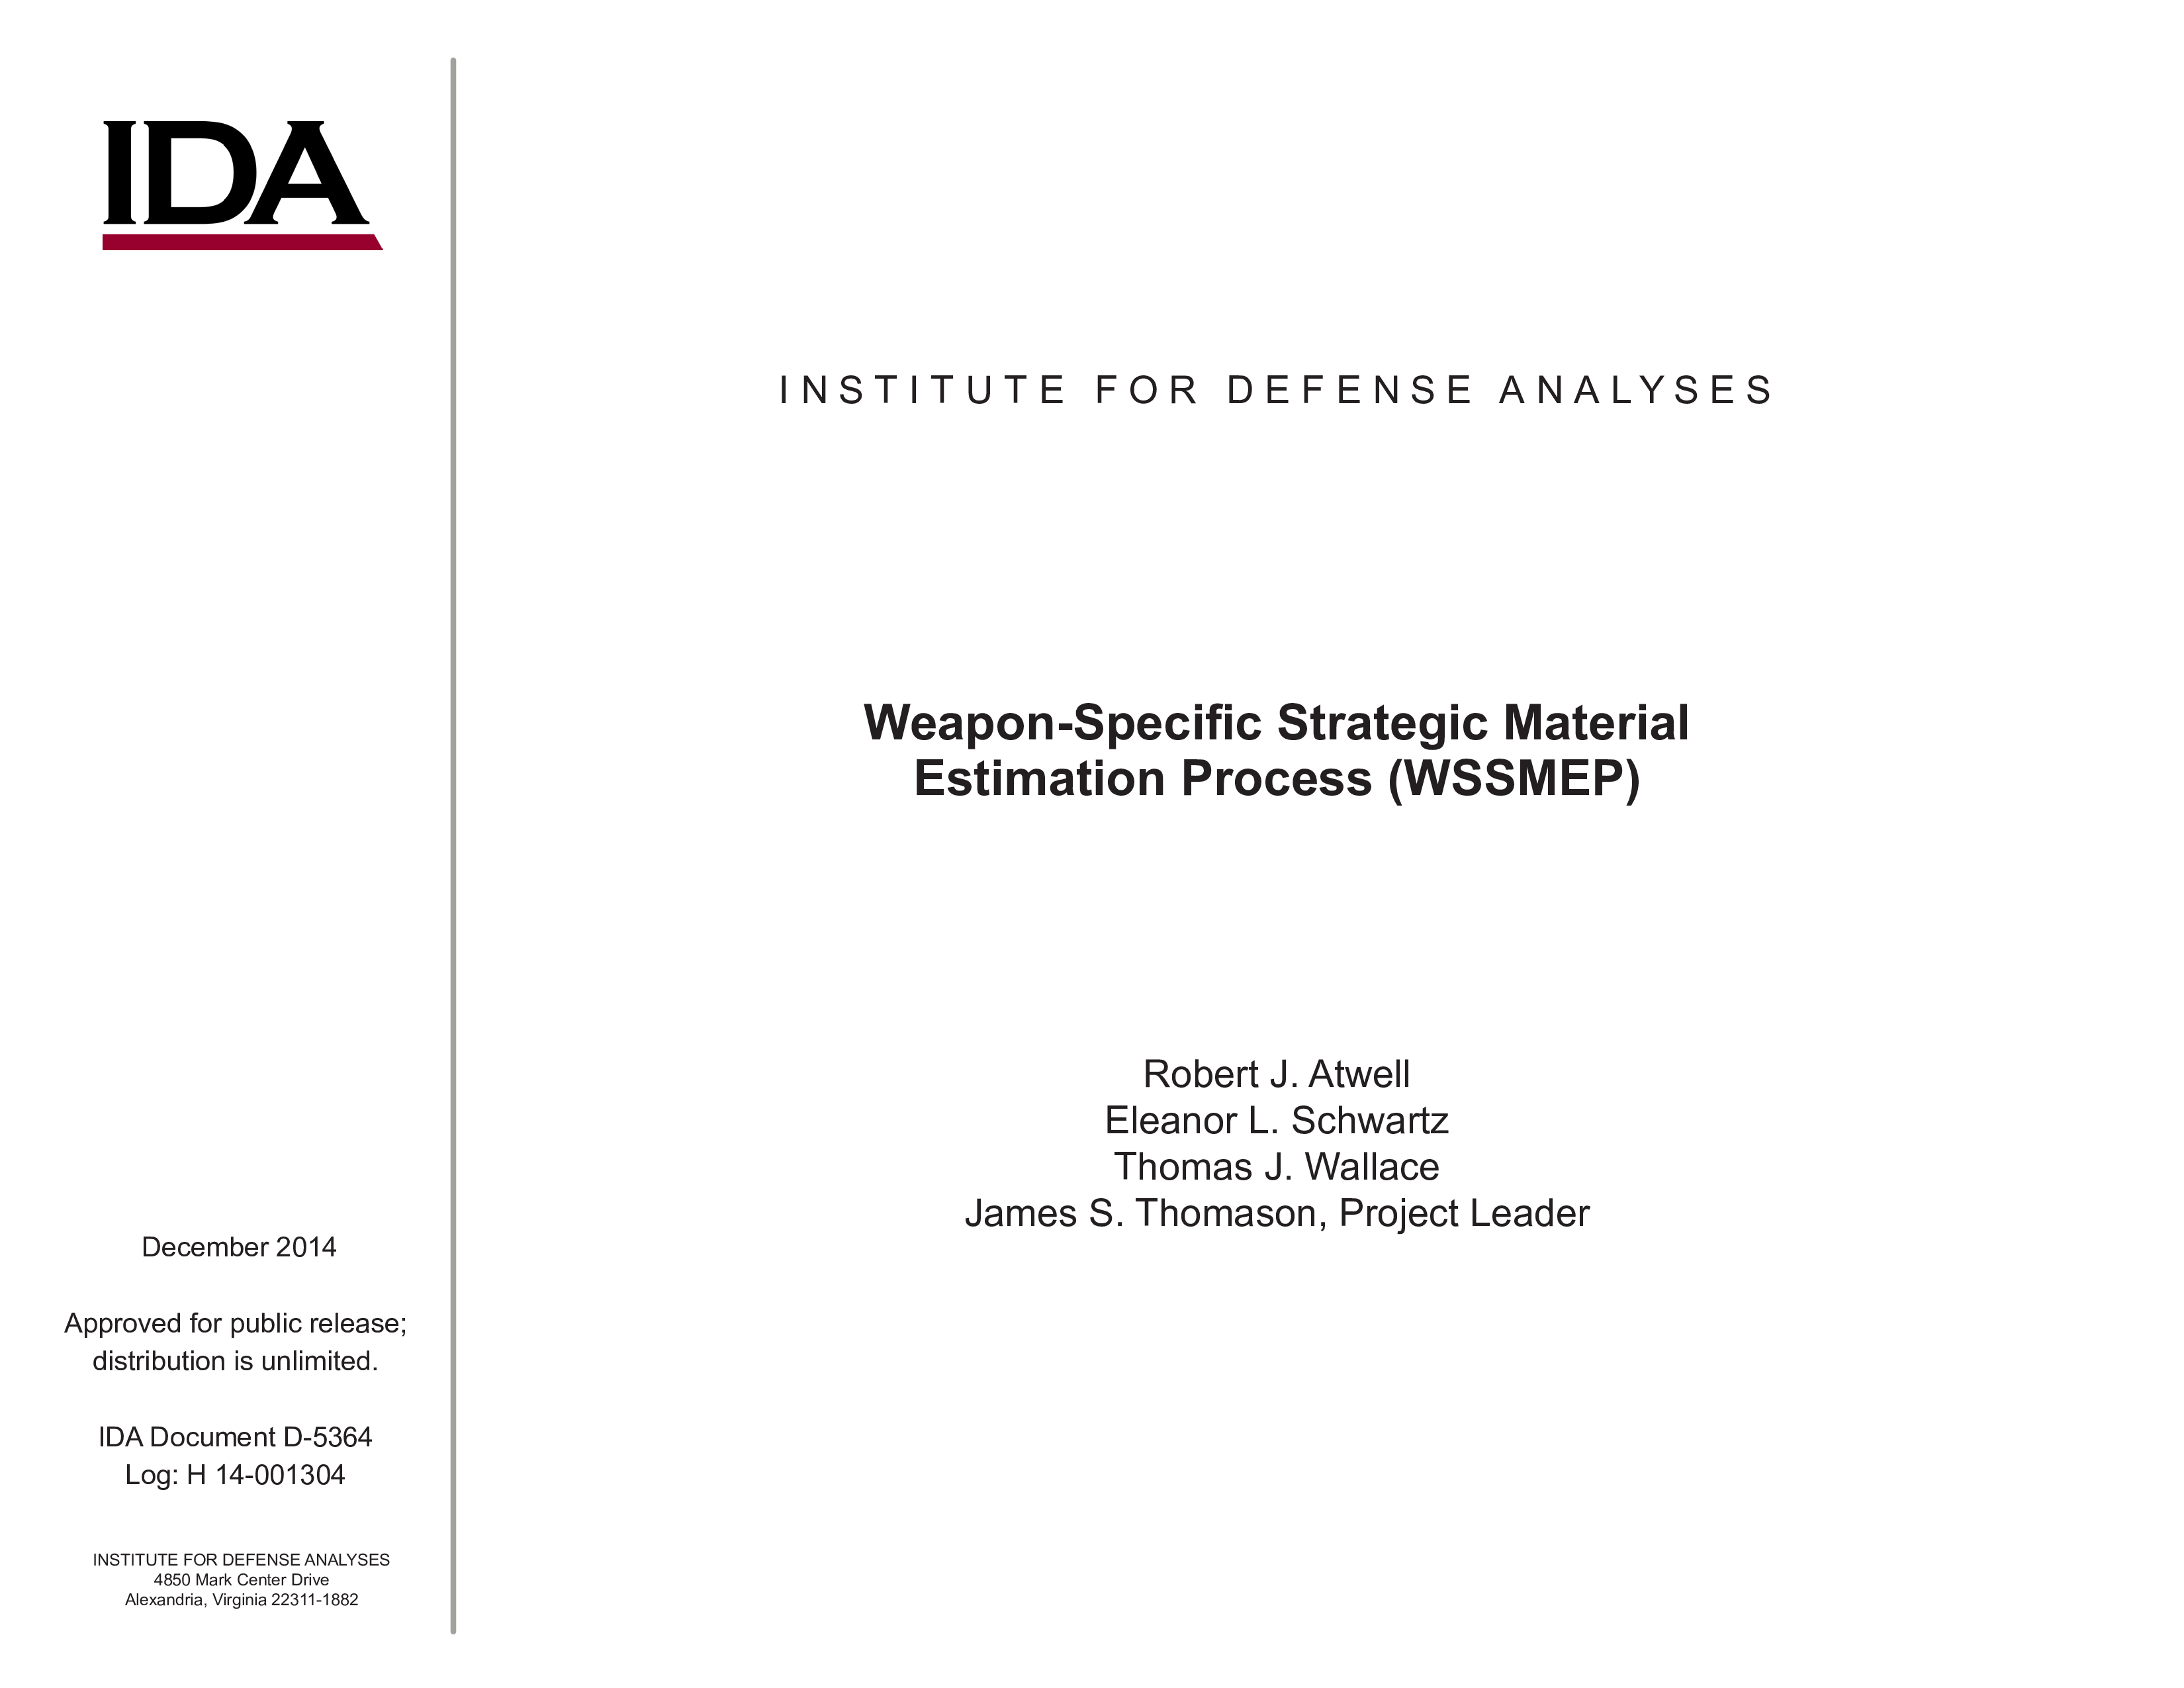 Weapon-Specific Strategic Material Estimation Process (WSSMEP)